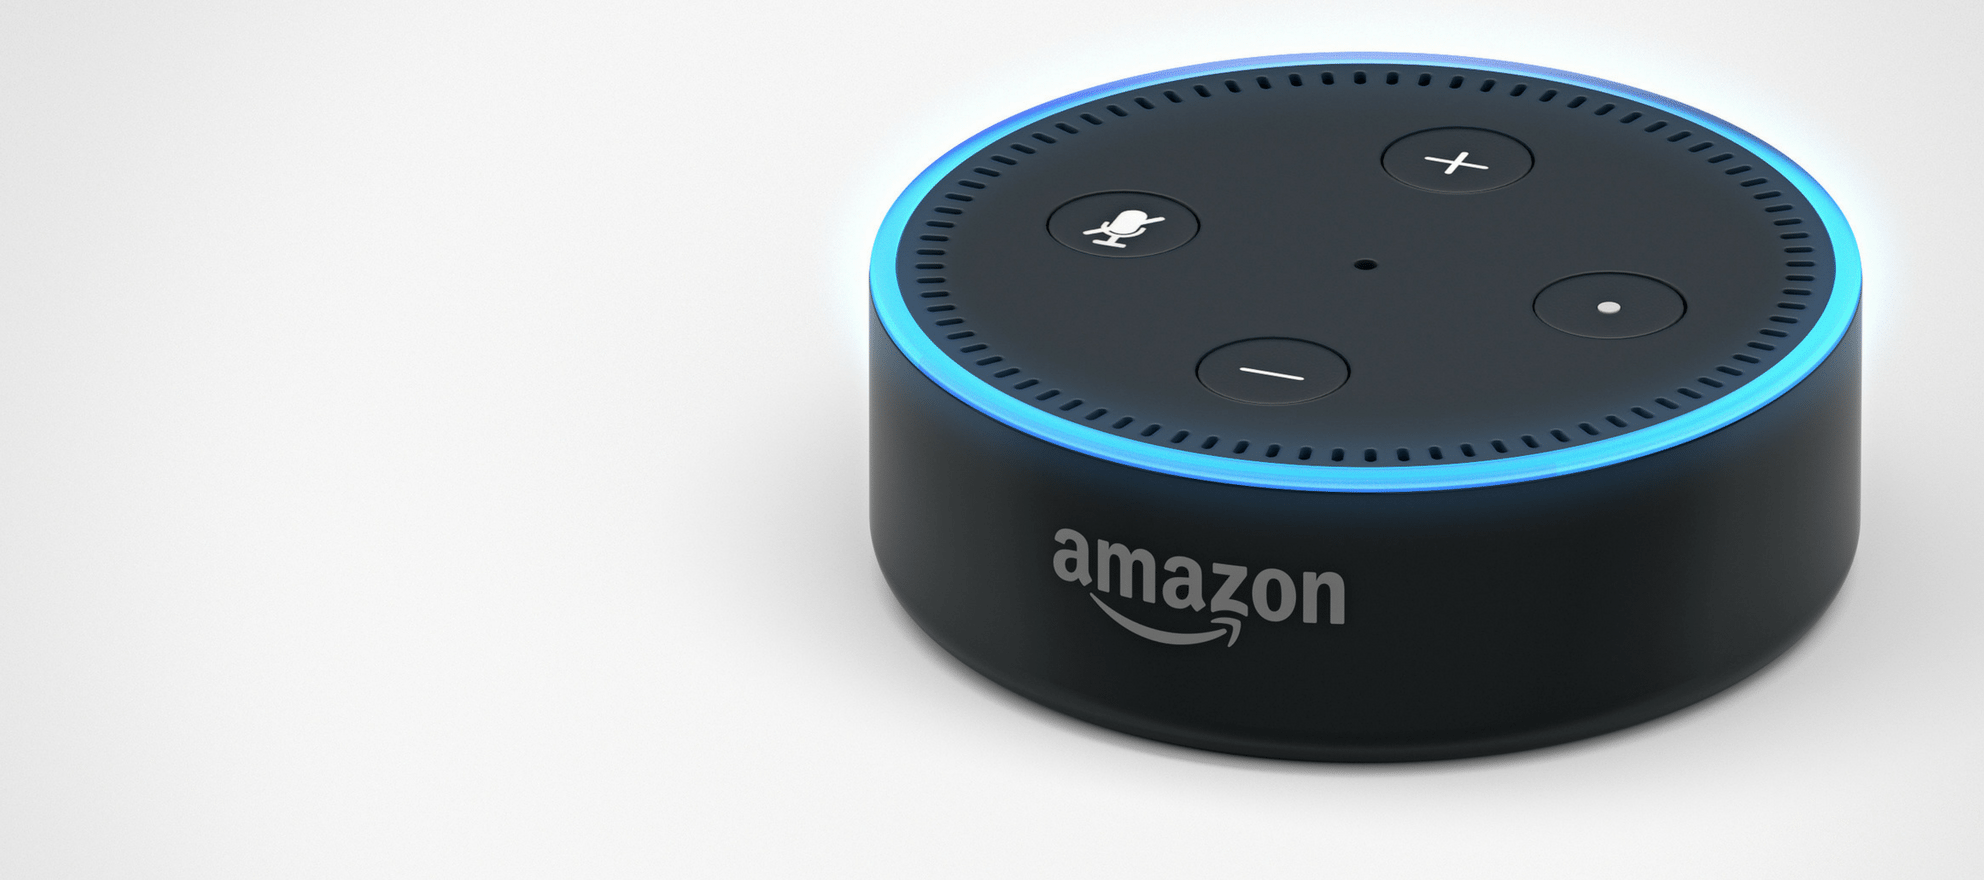 Amazon Is Making Custom AI Chips For Alexa - channelnews